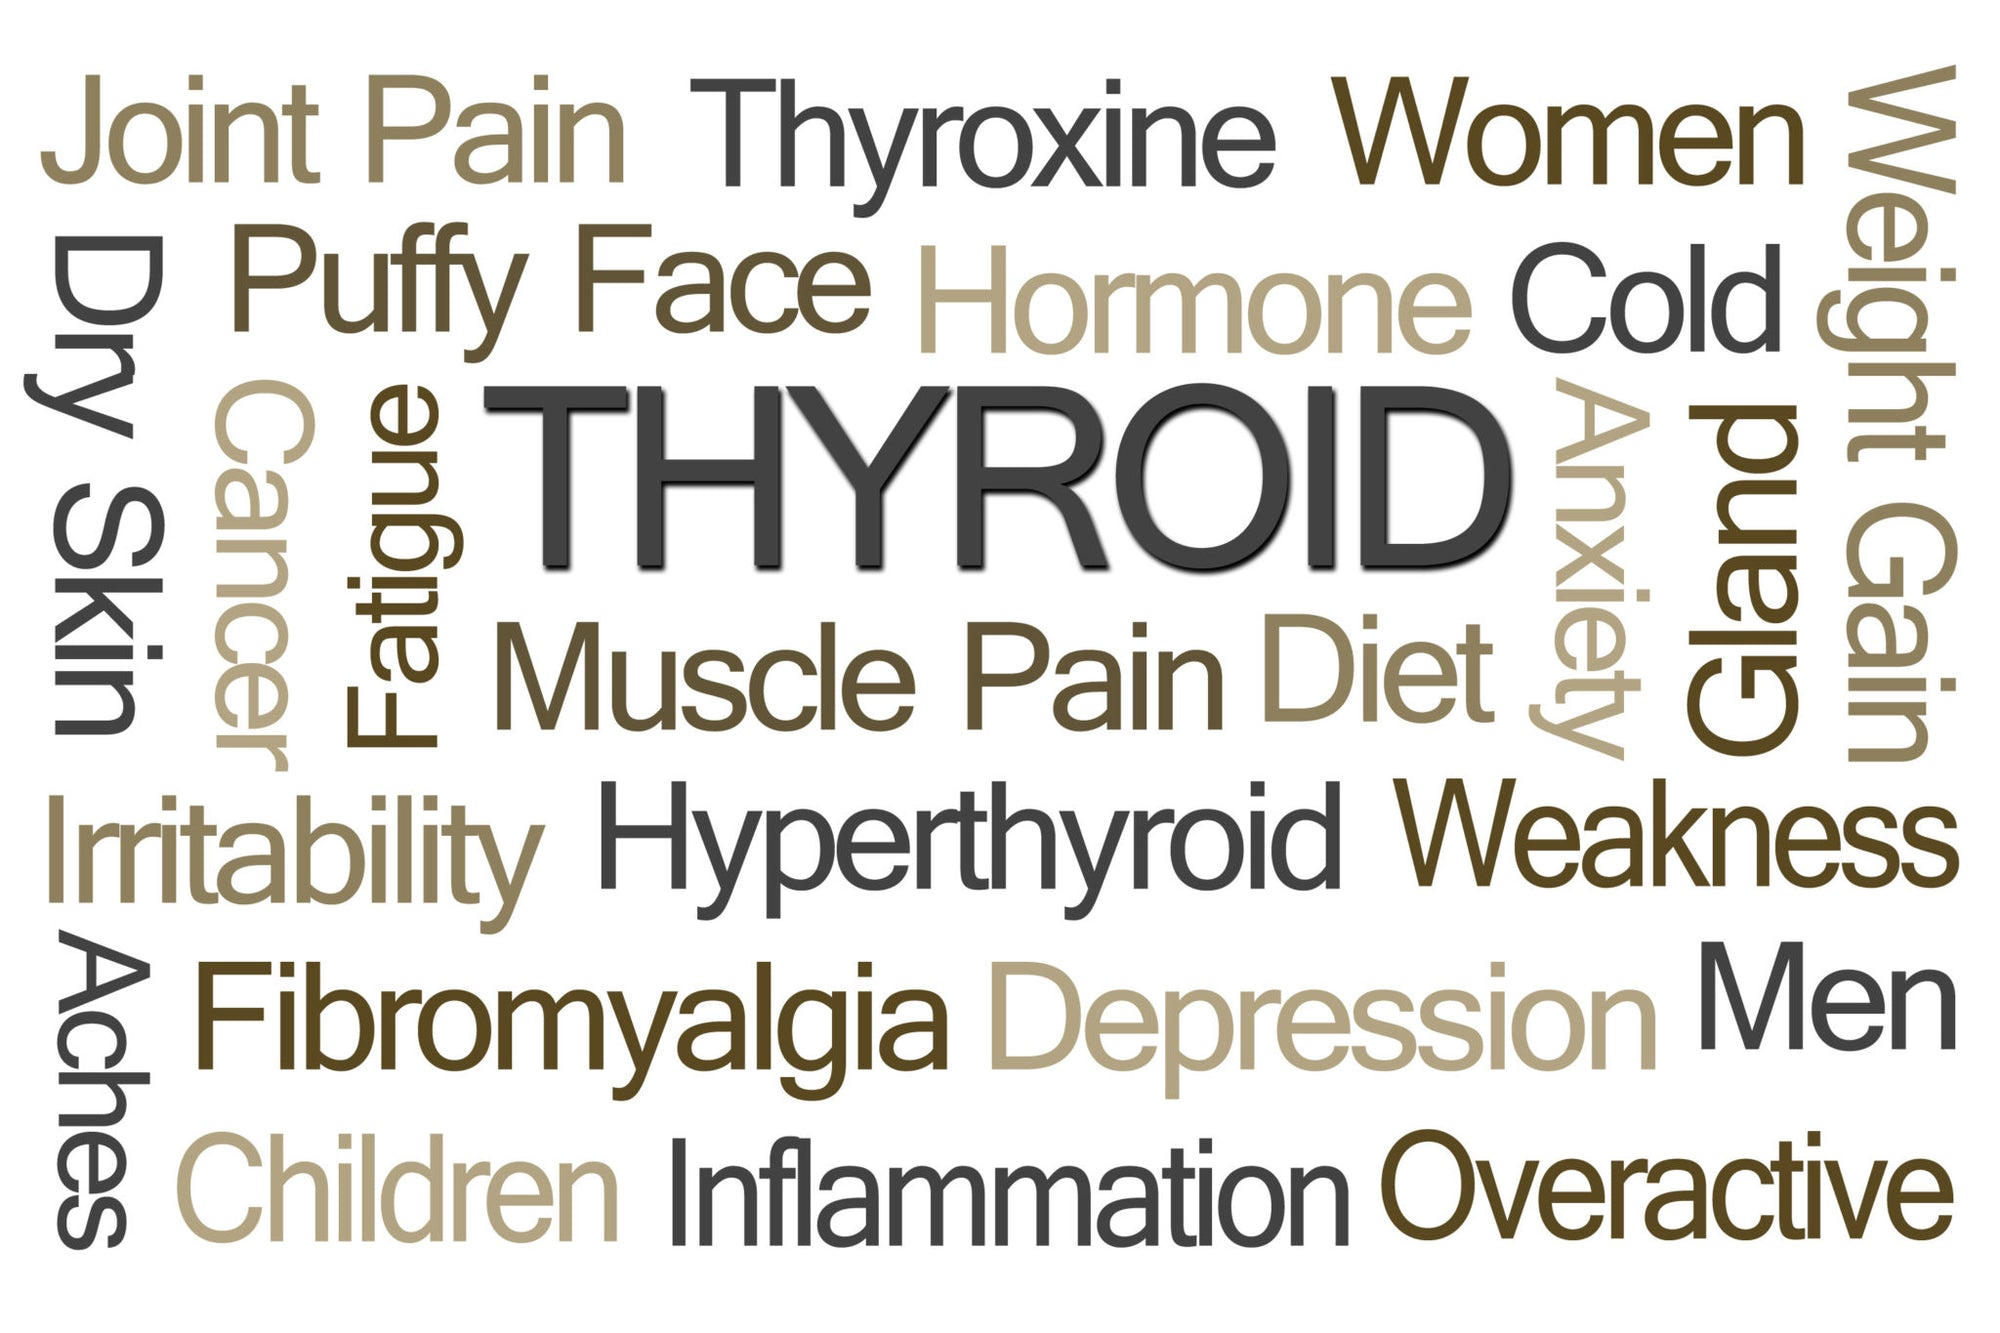 Thyroid Awareness Week - June 1st - 7th